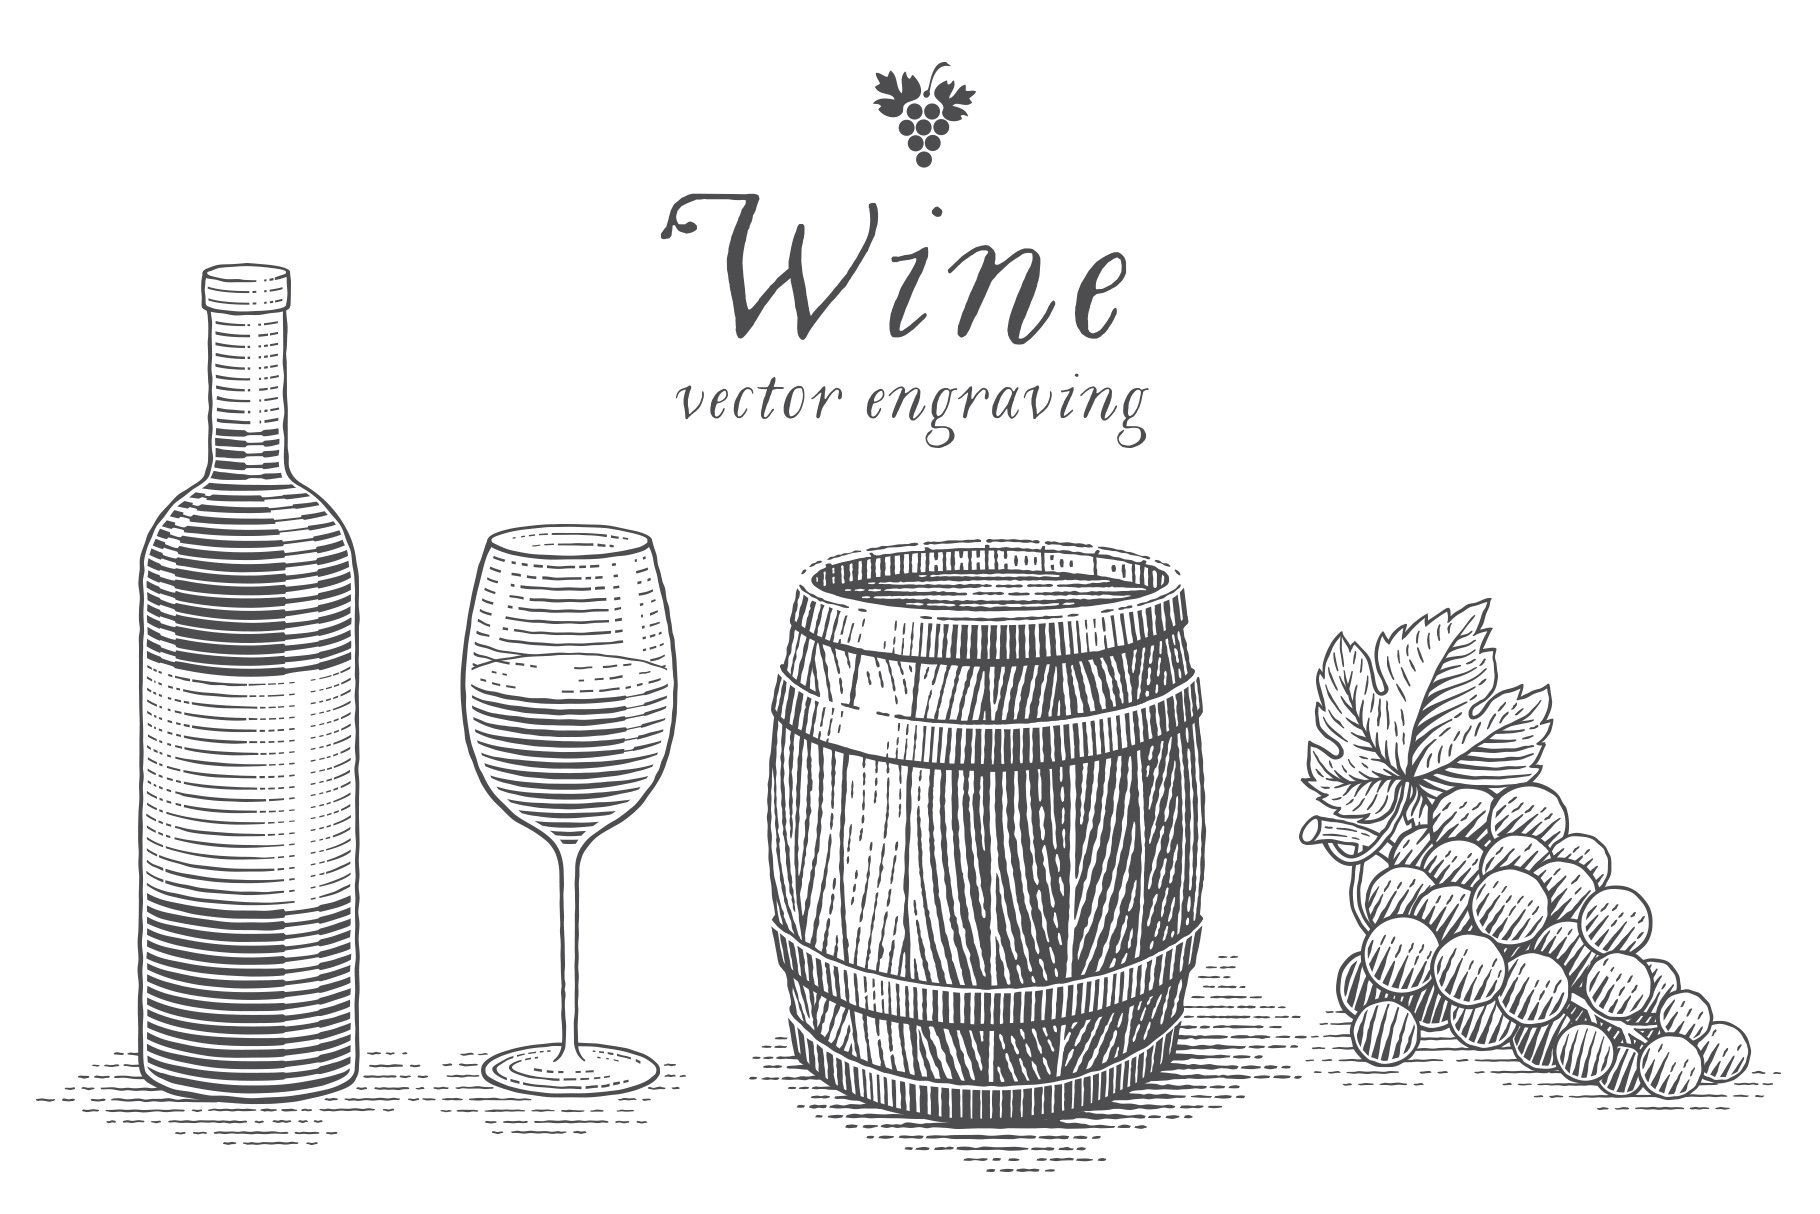 Wine bundle #2 cover image.